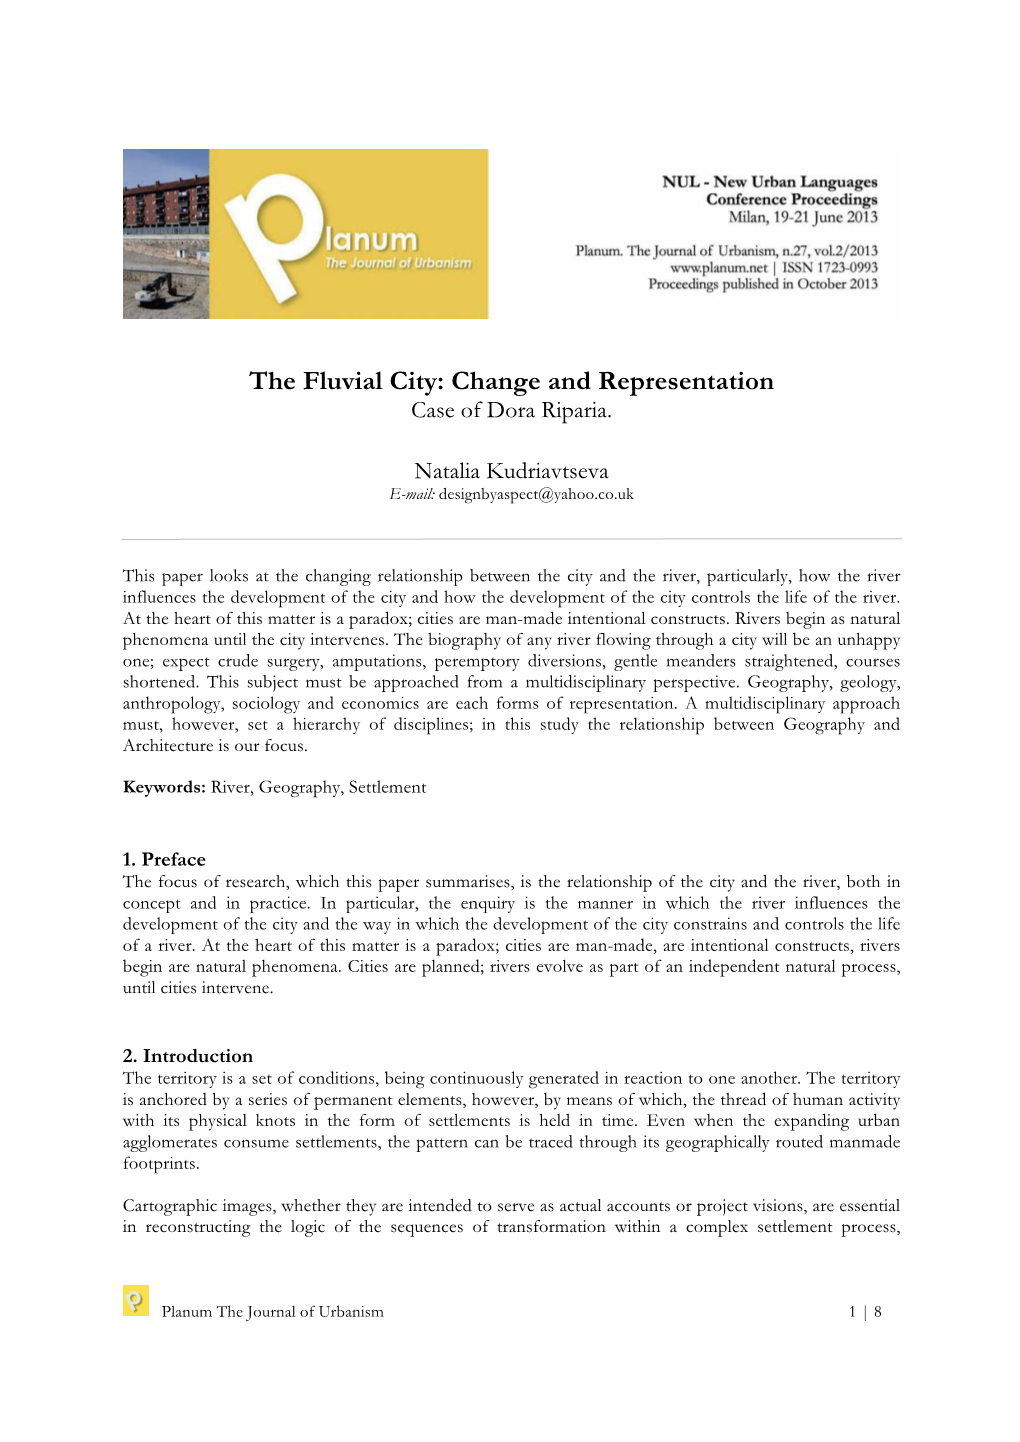 The Fluvial City: Change and Representation Case of Dora Riparia